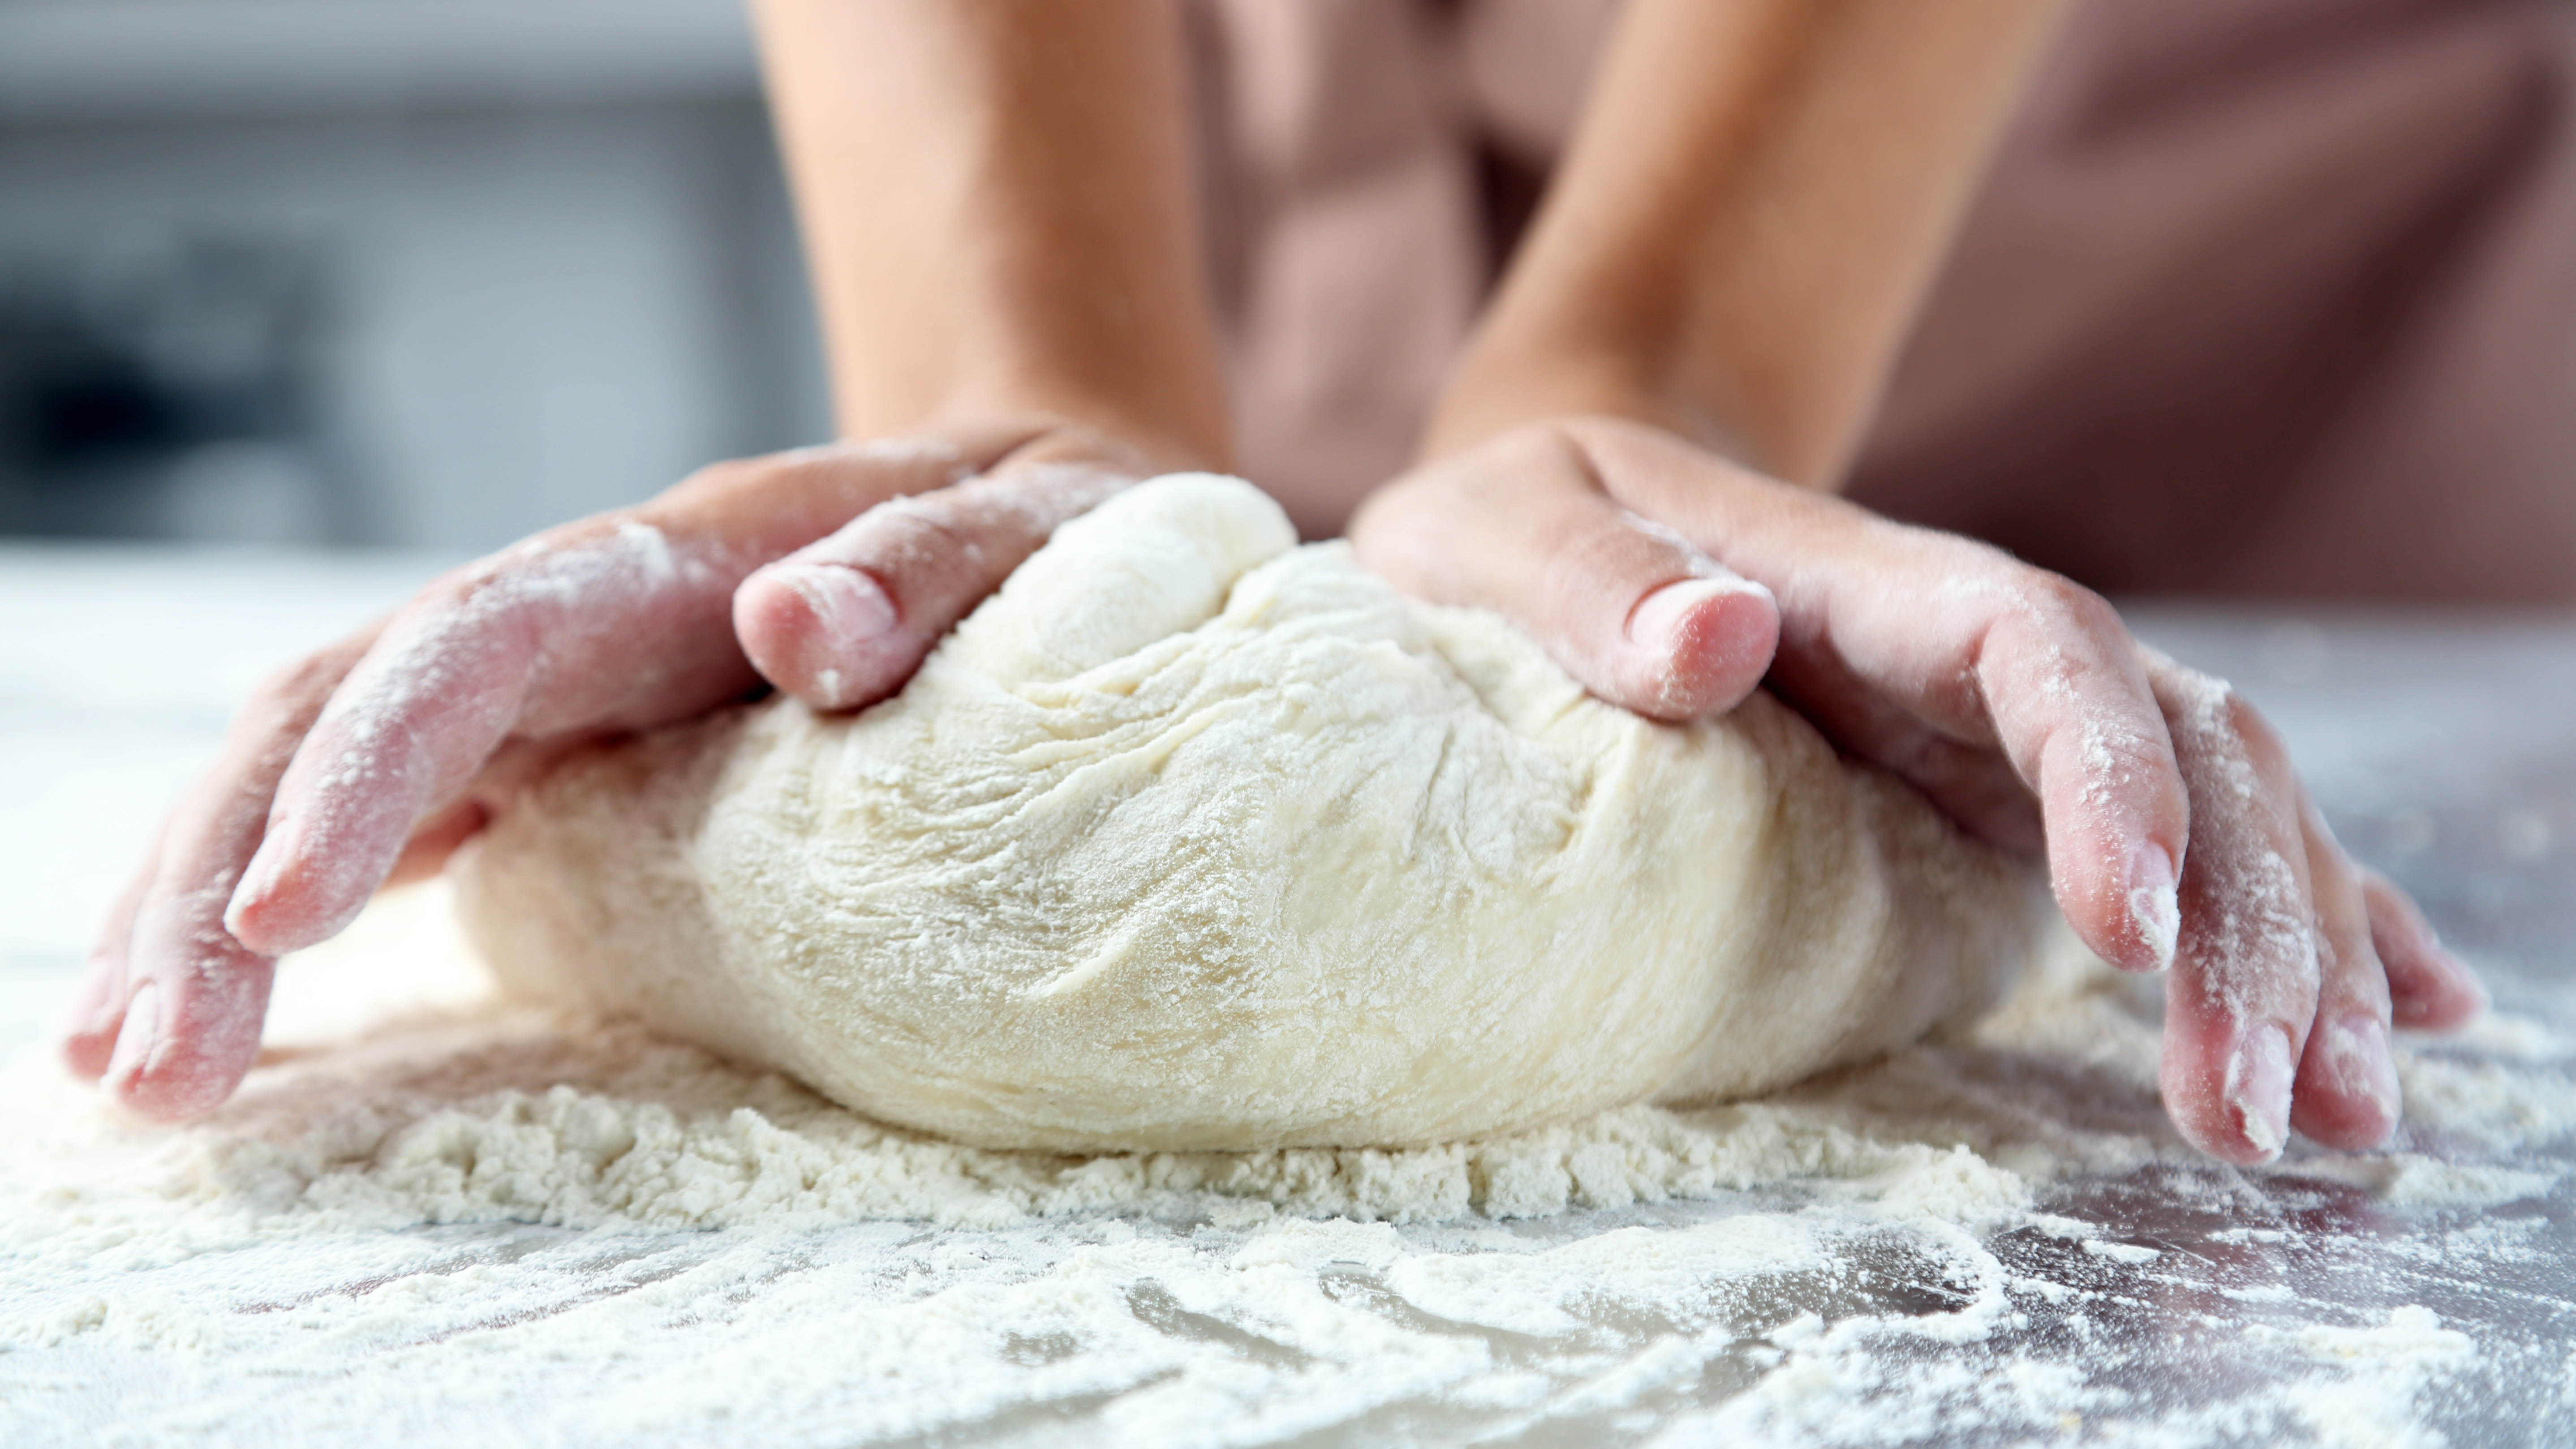 Как замешивать тесто на хлеб. Месить тесто. Руки месят тесто. Замешивание теста. Вымешиваем тесто руками.